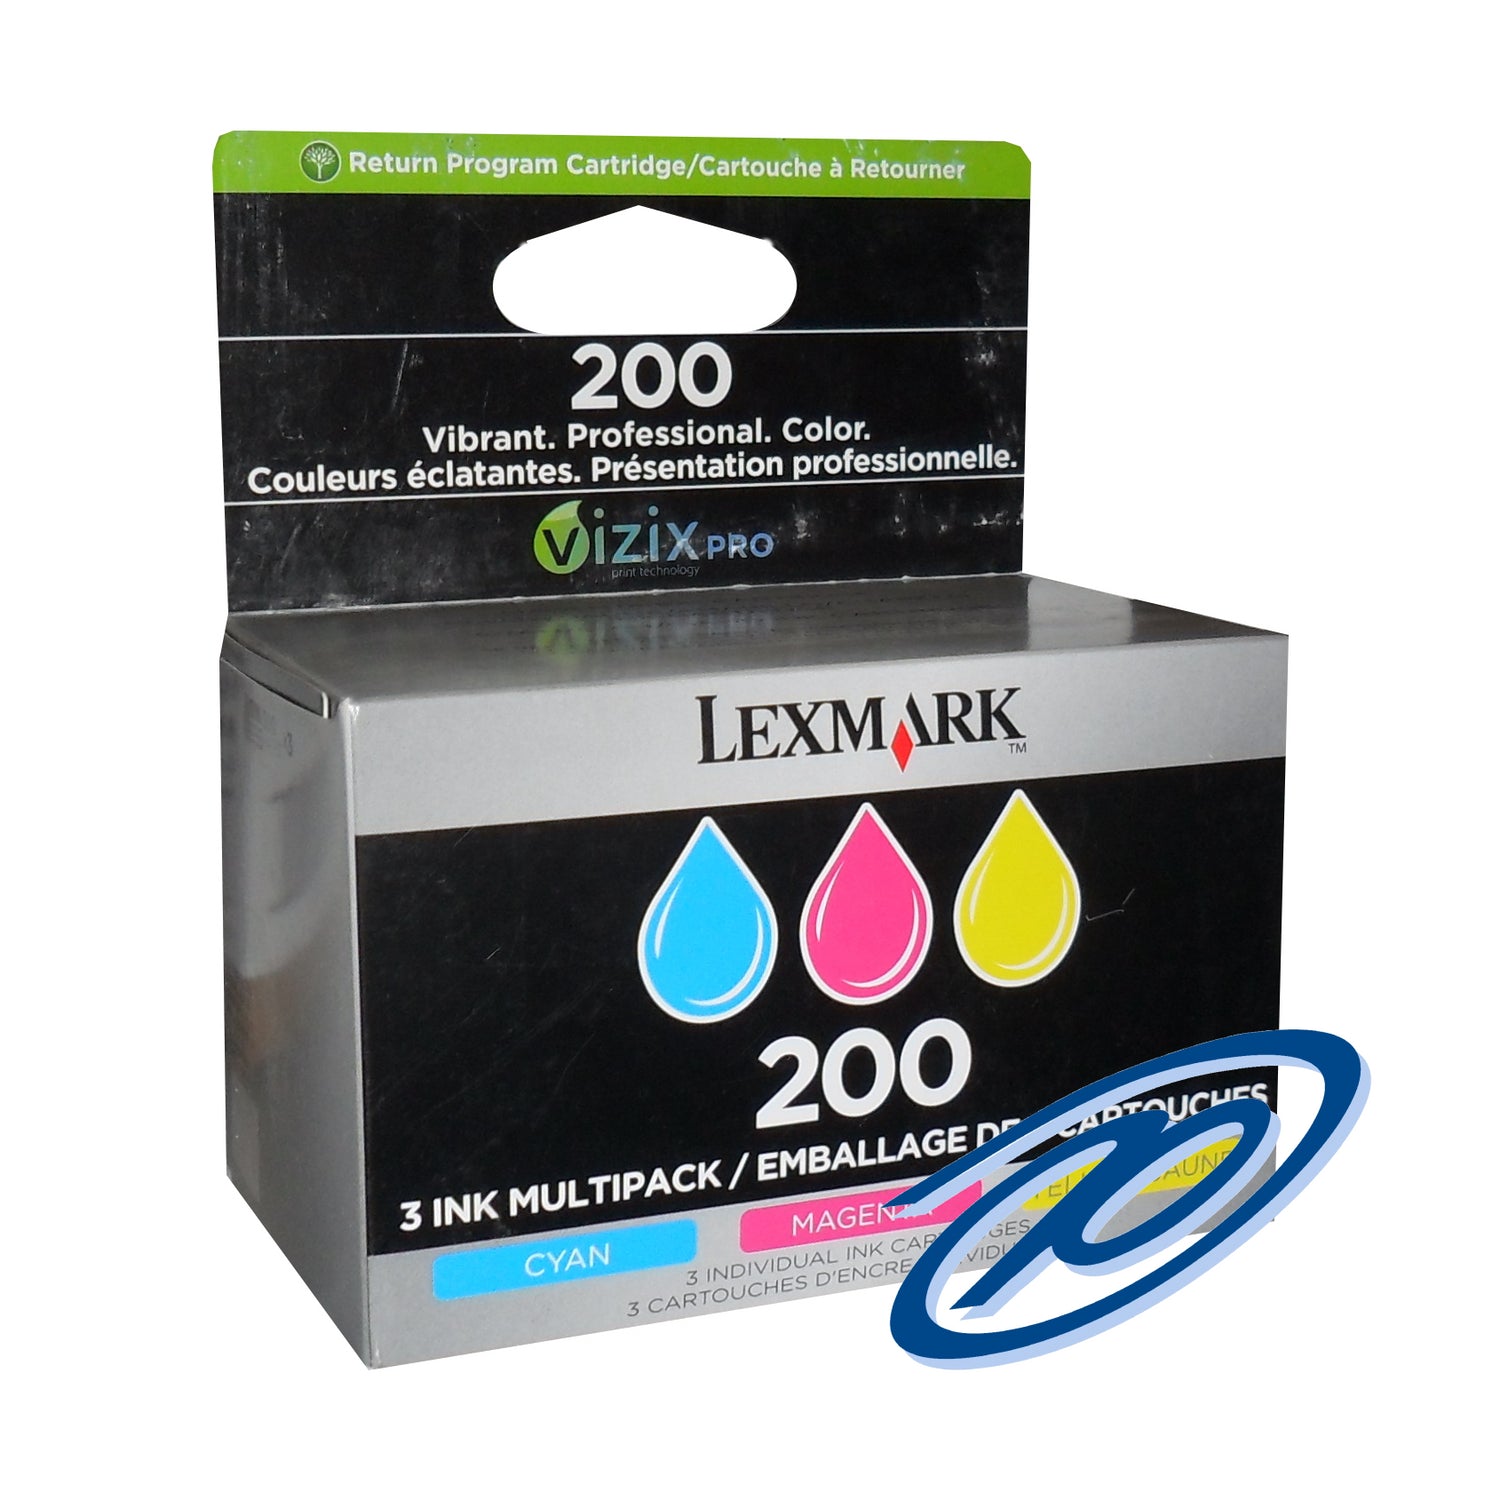 Lexmark ink